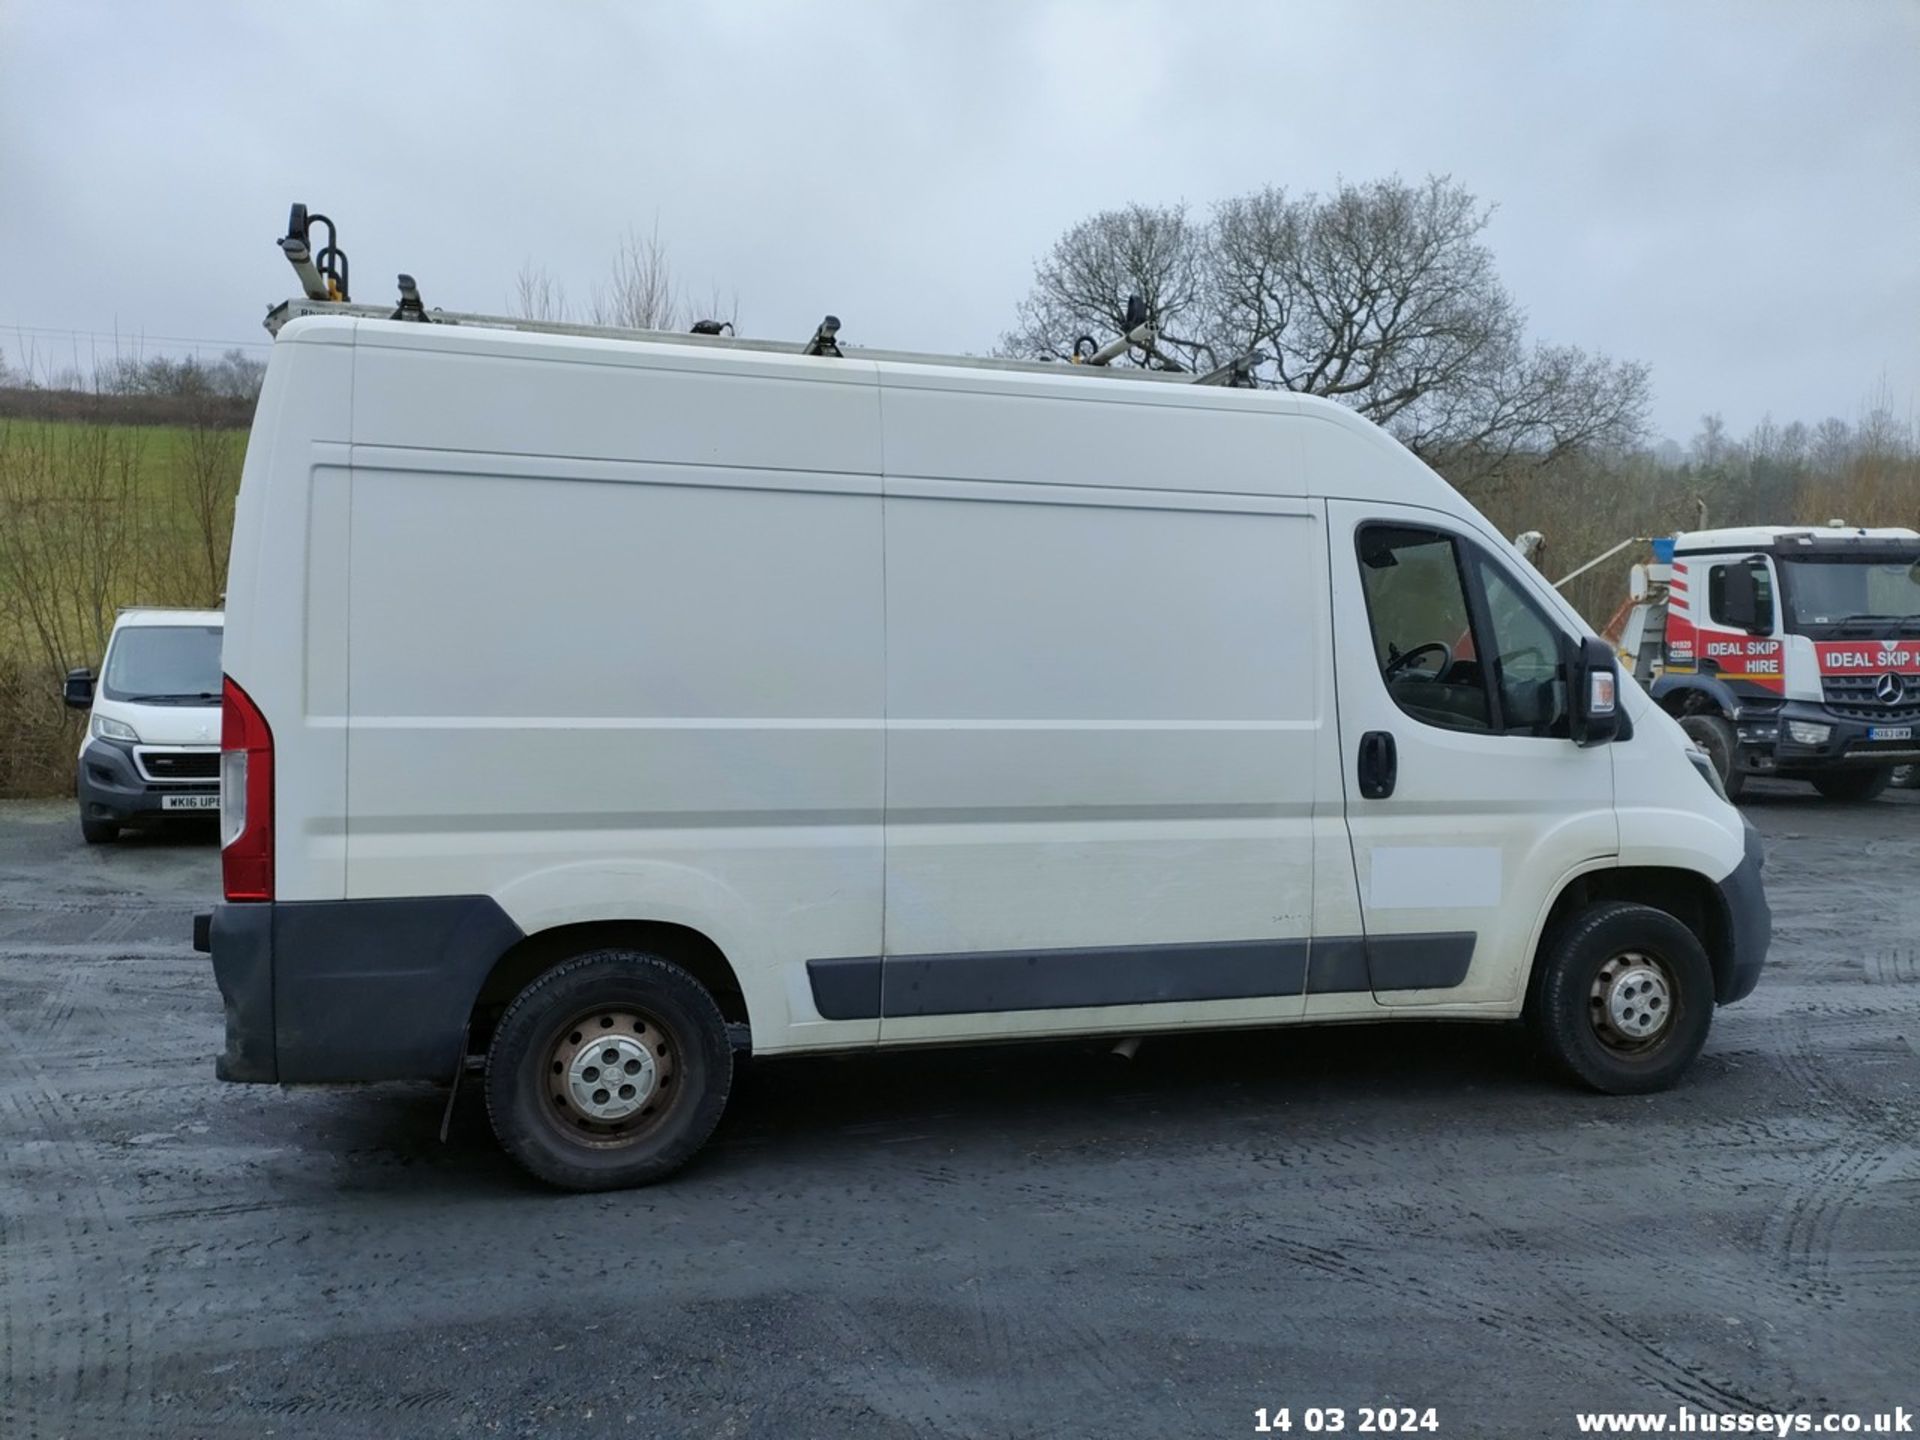 16/16 PEUGEOT BOXER 335 L2H2 HDI - 2198cc 5dr Van (White, 131k) - Image 42 of 62